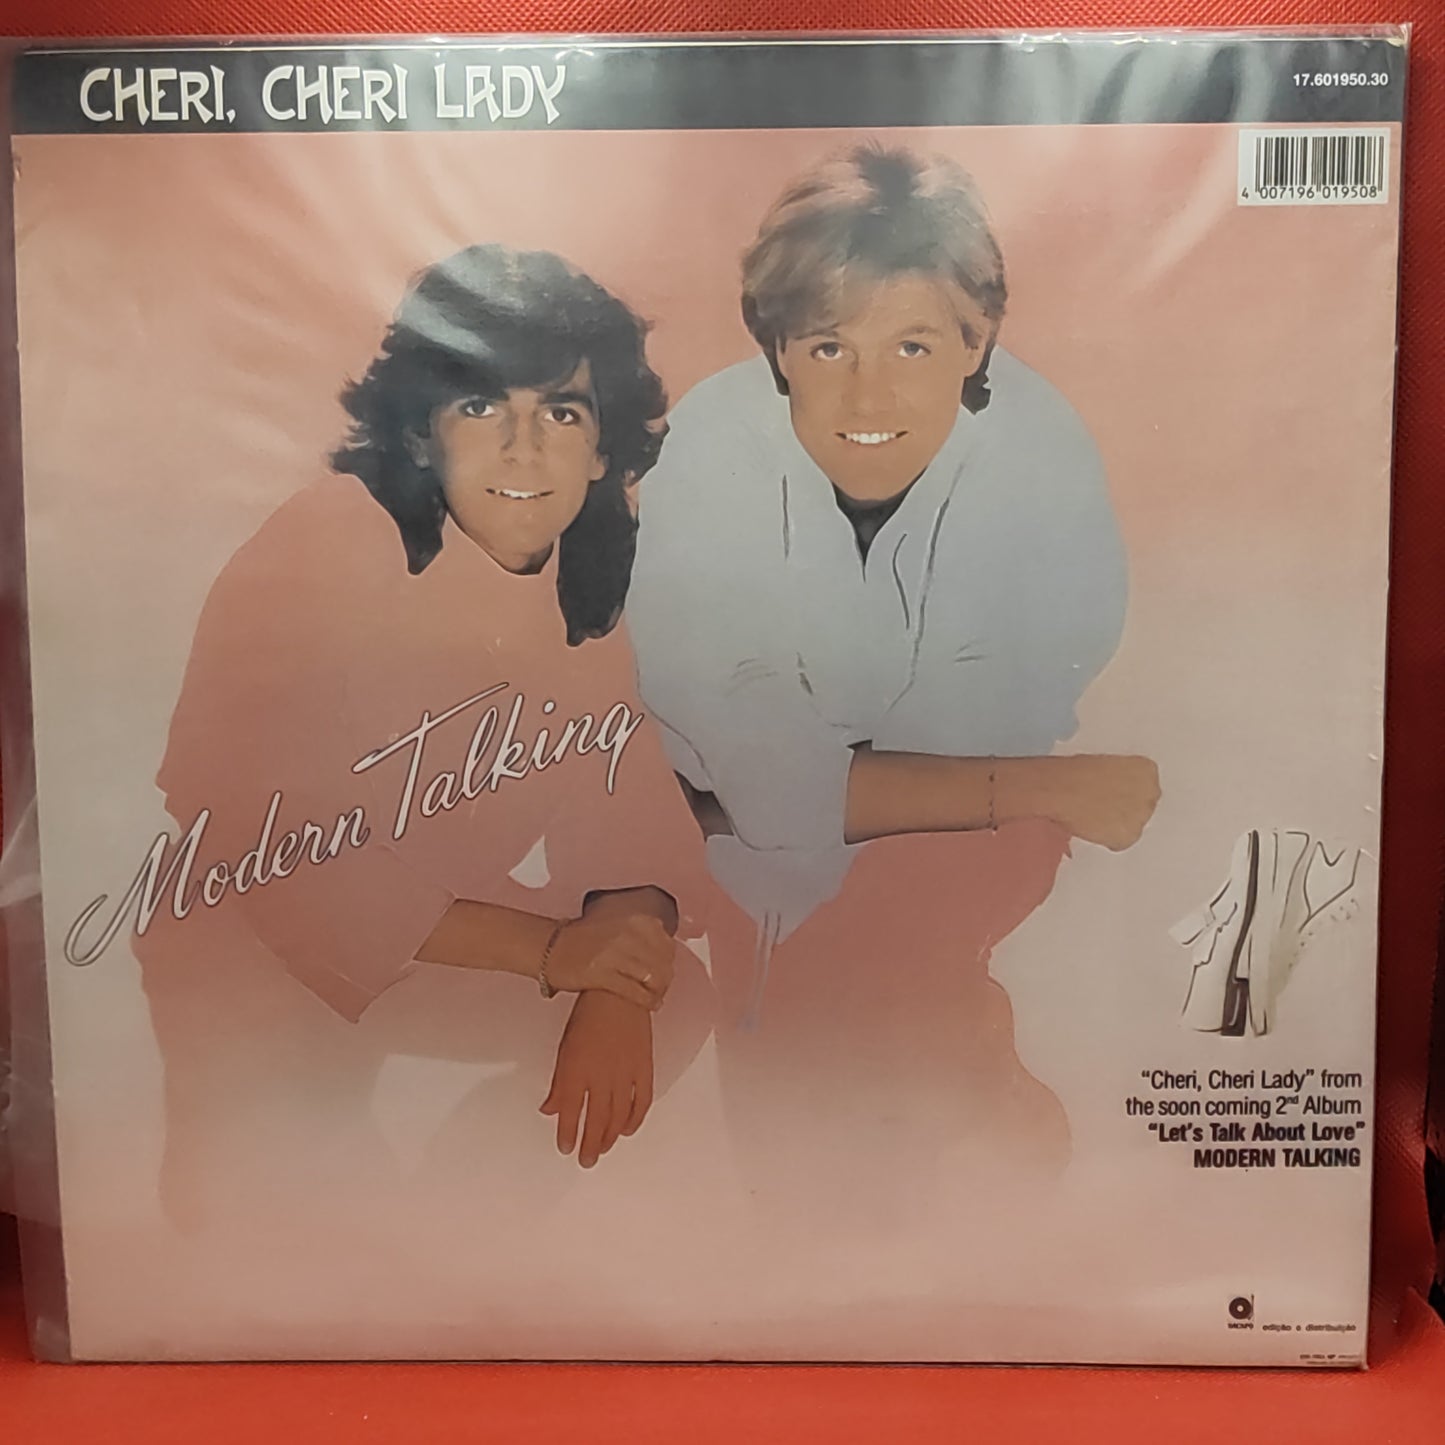 Modern Talking – Cheri, Cheri Lady (Special Dance Version)